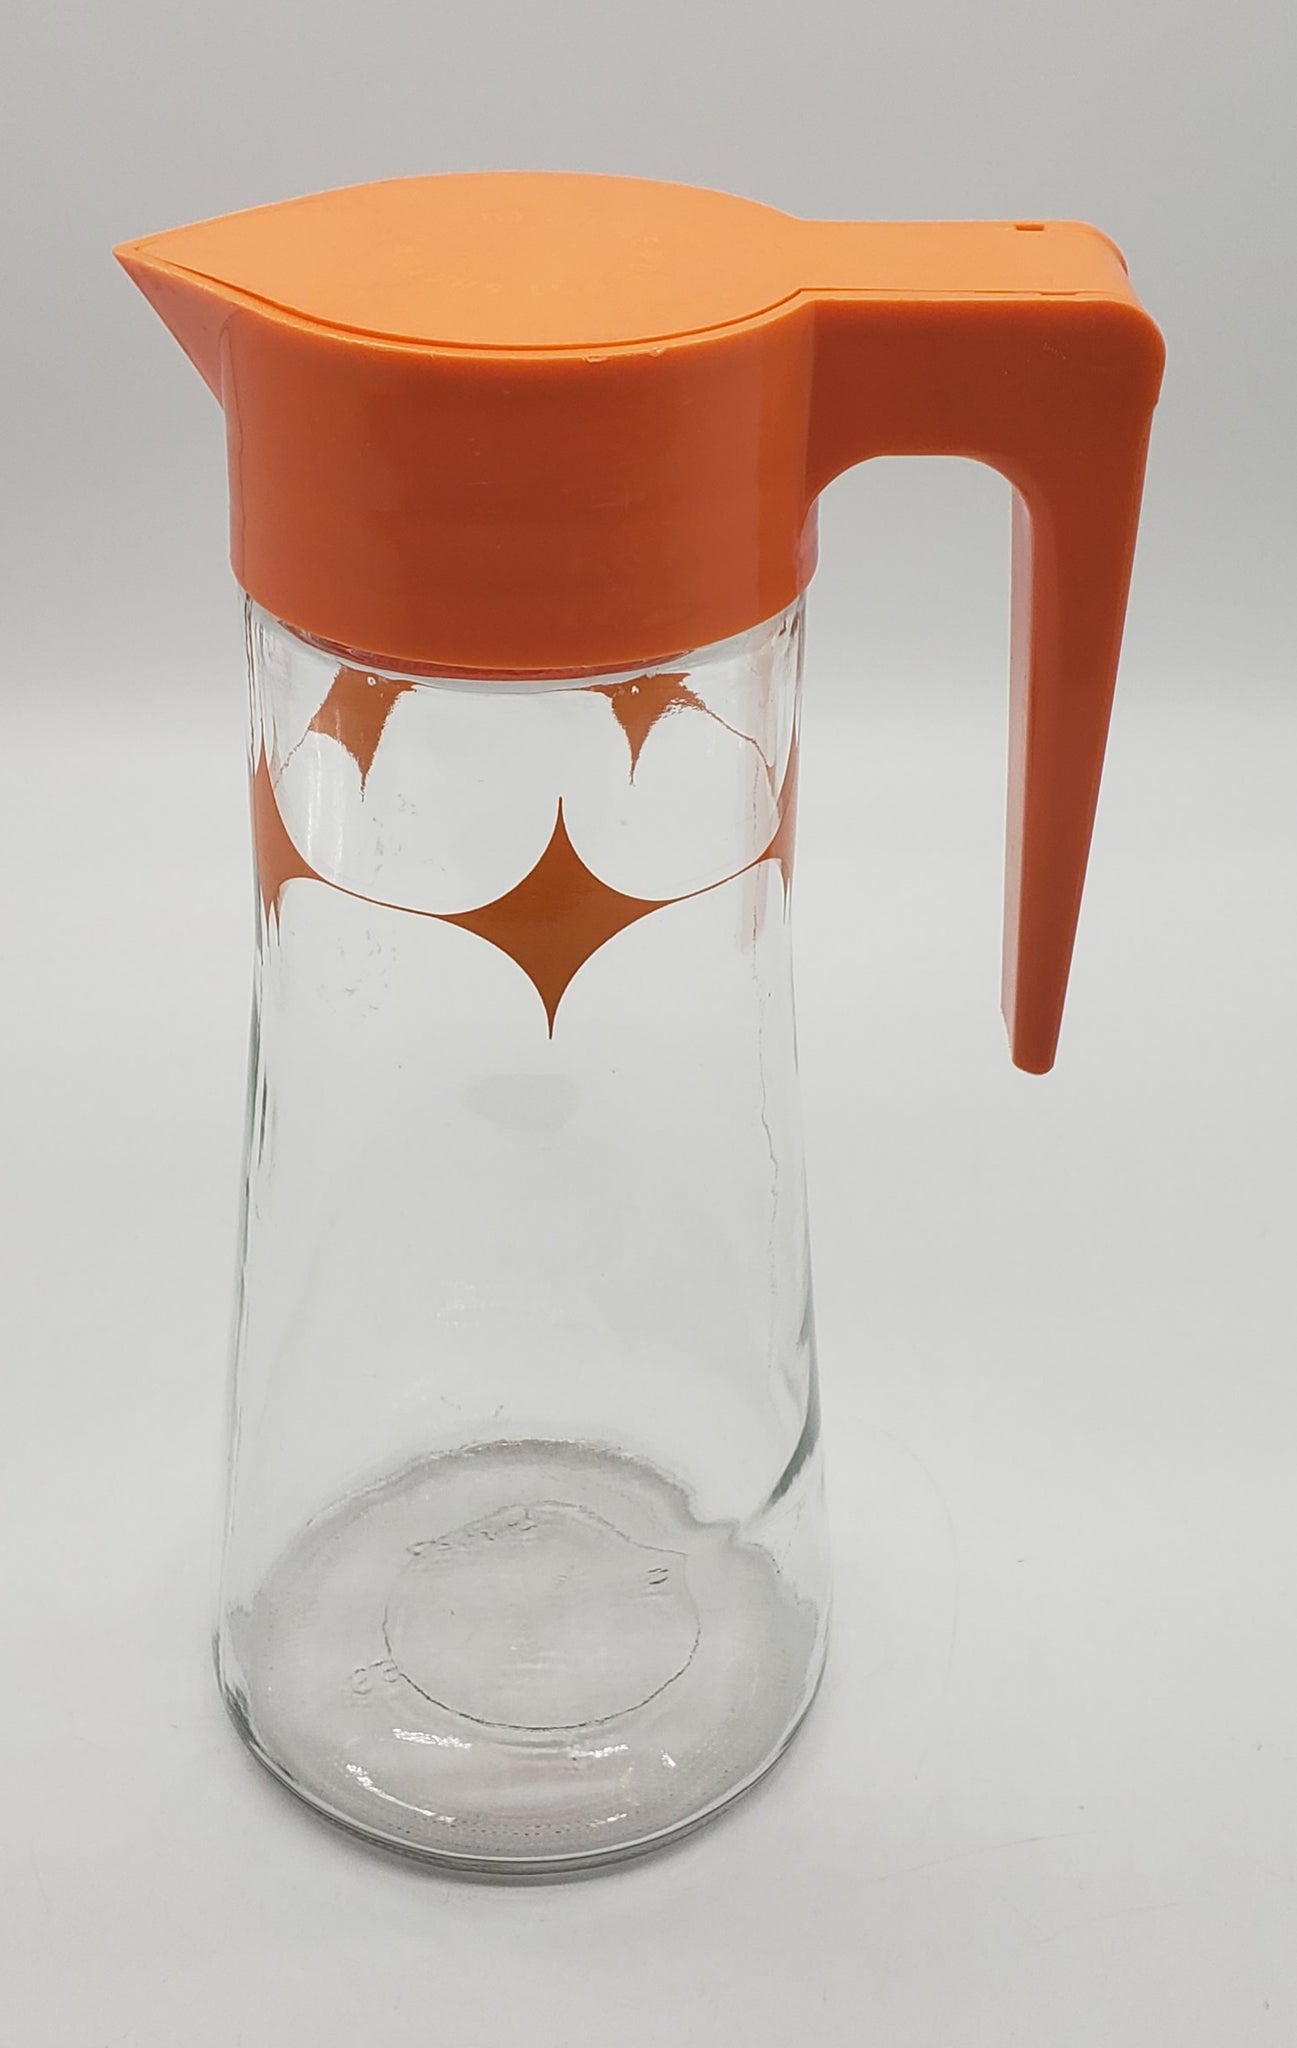 Orange Juice Carafe with Lid, Anchor Hocking, 1950s – The Vintage